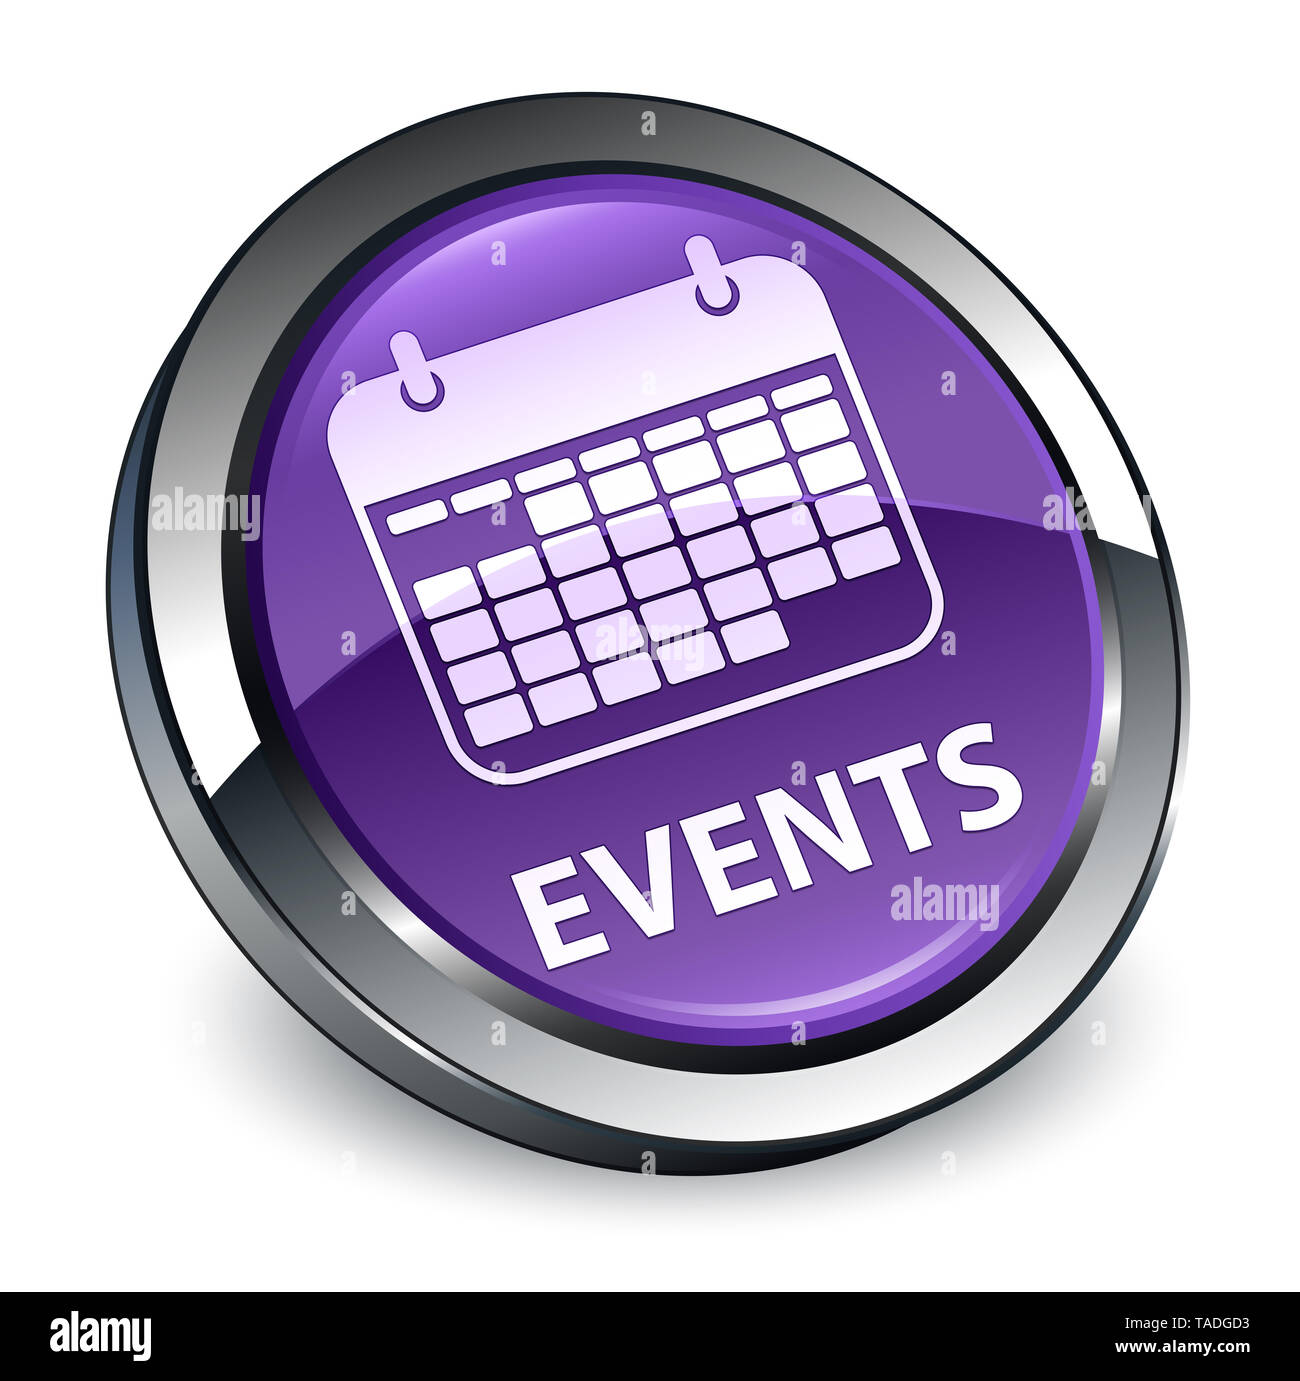 upcoming events calendar icon